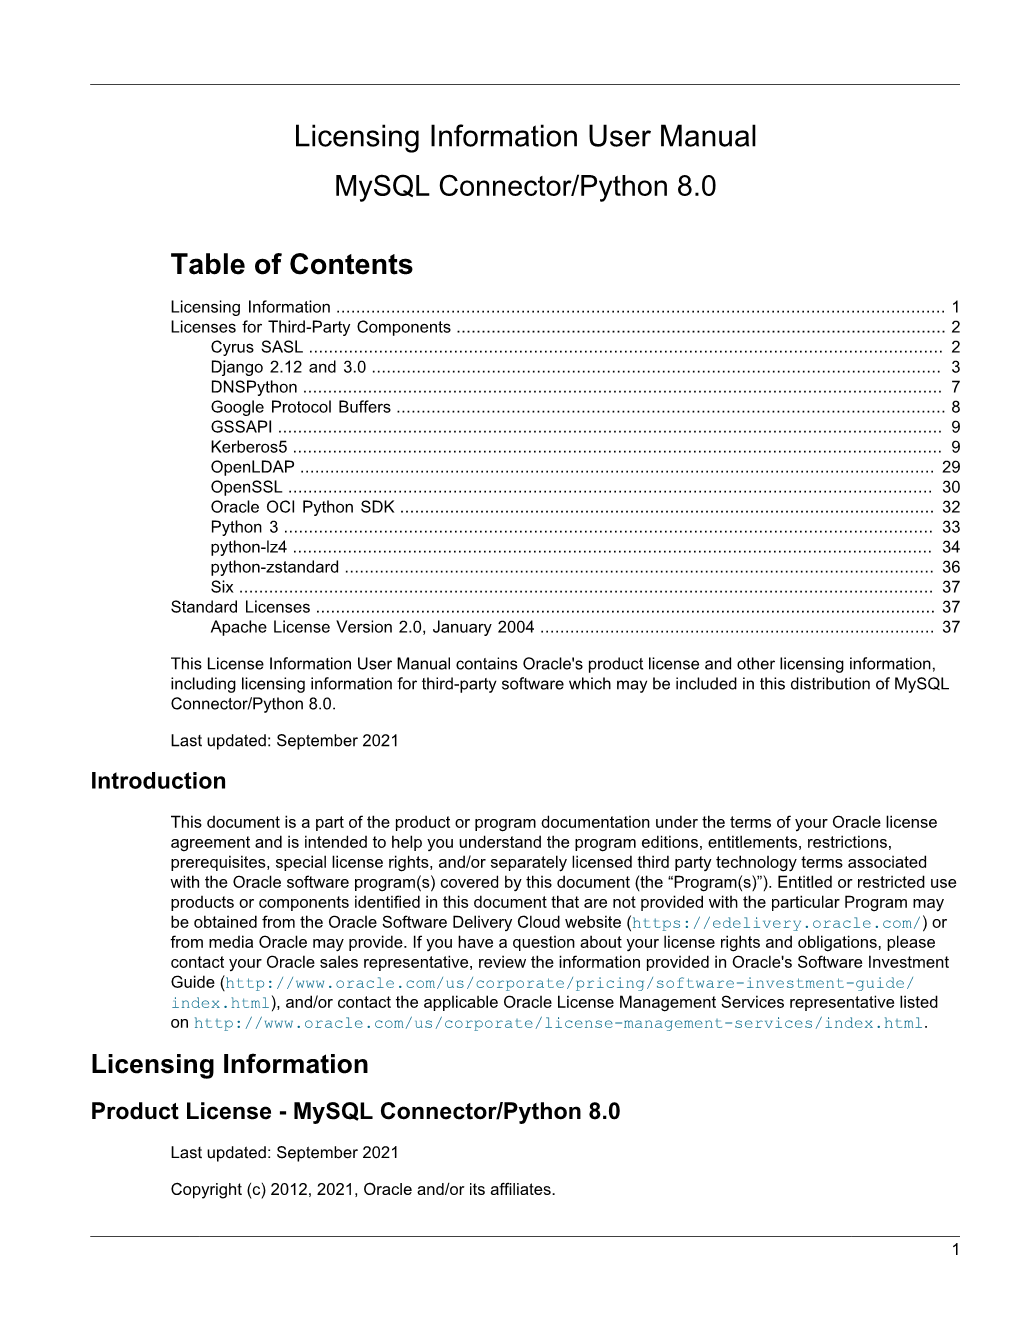 Licensing Information User Manual Mysql Connector/Python 8.0